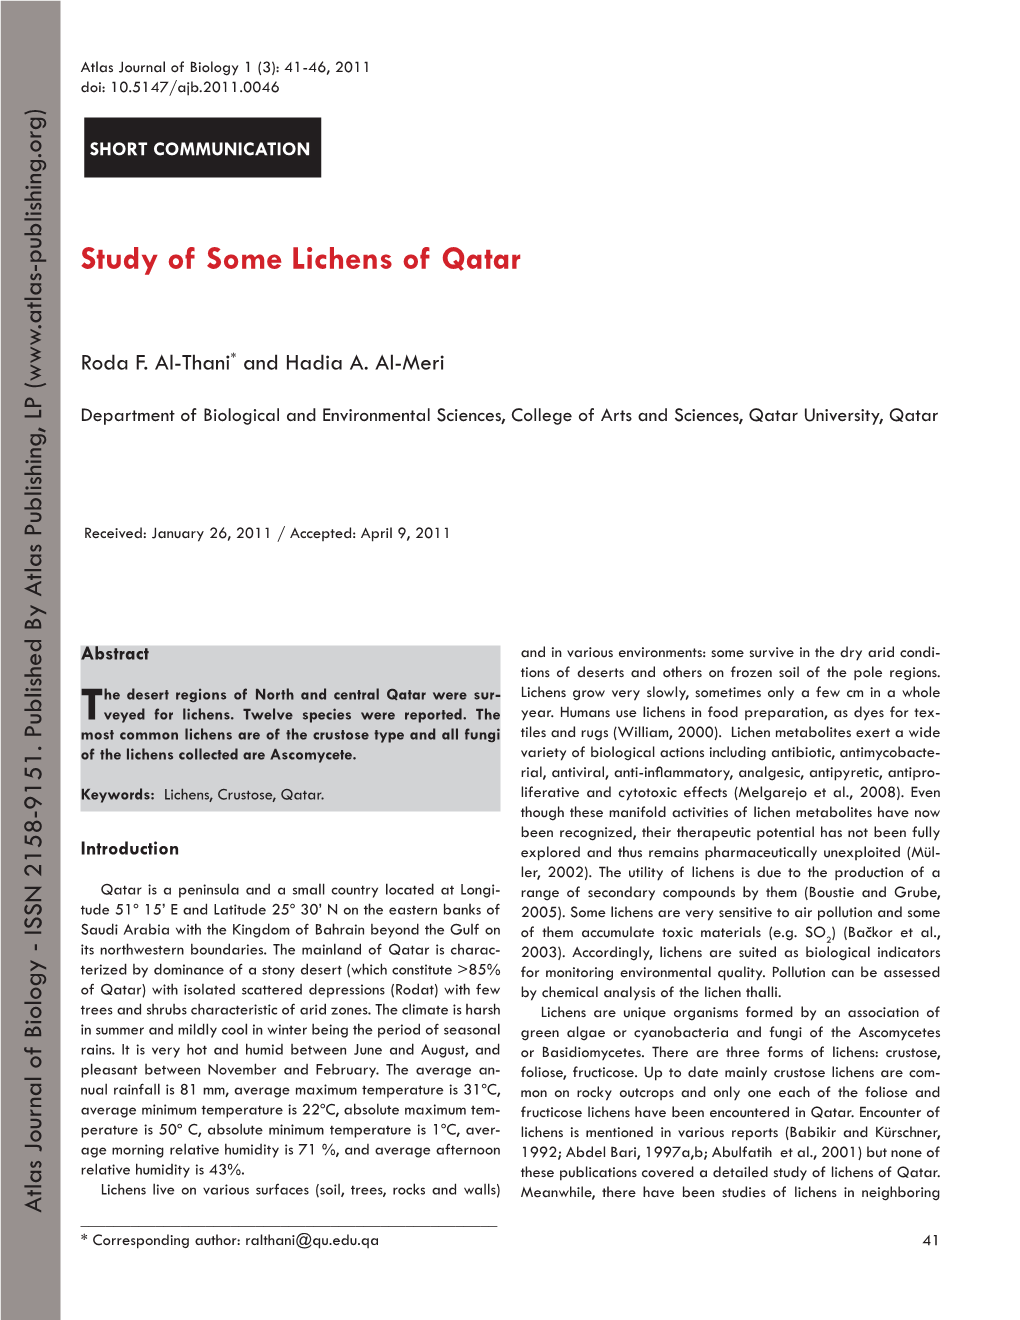 Study of Some Lichens of Qatar